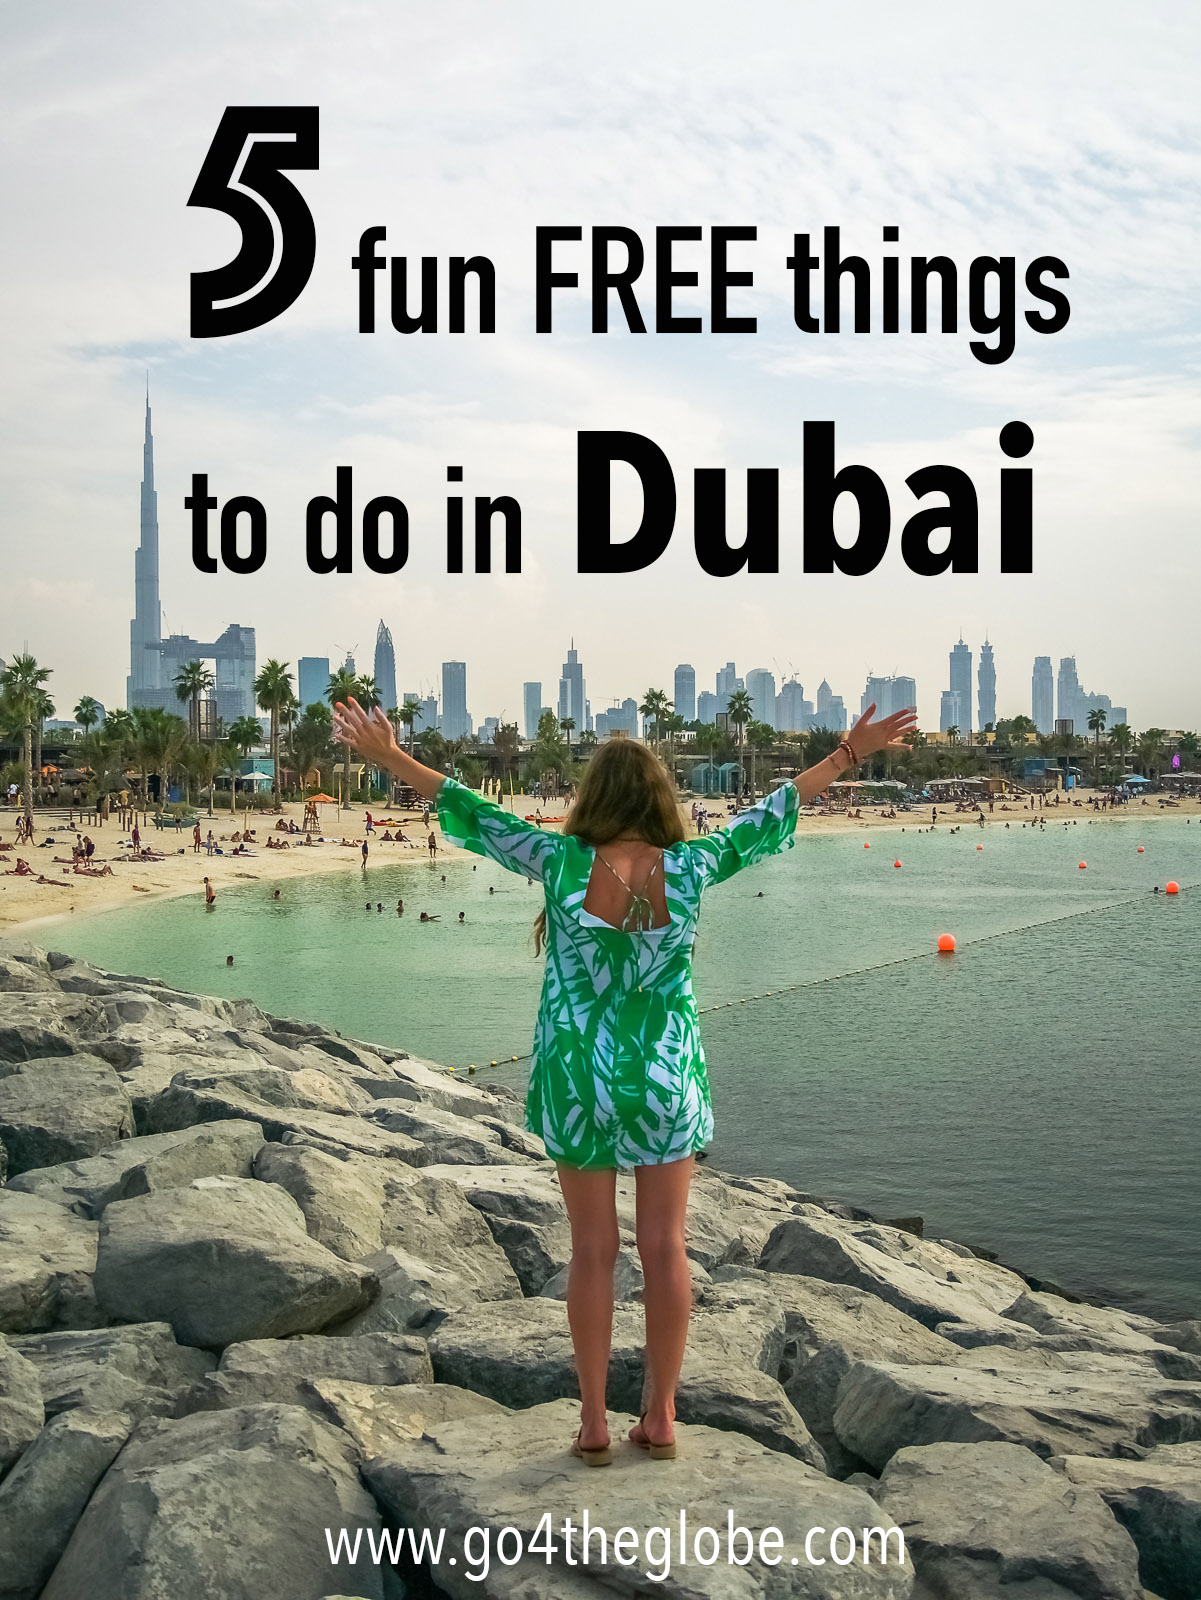 Fun free things to do in Dubai